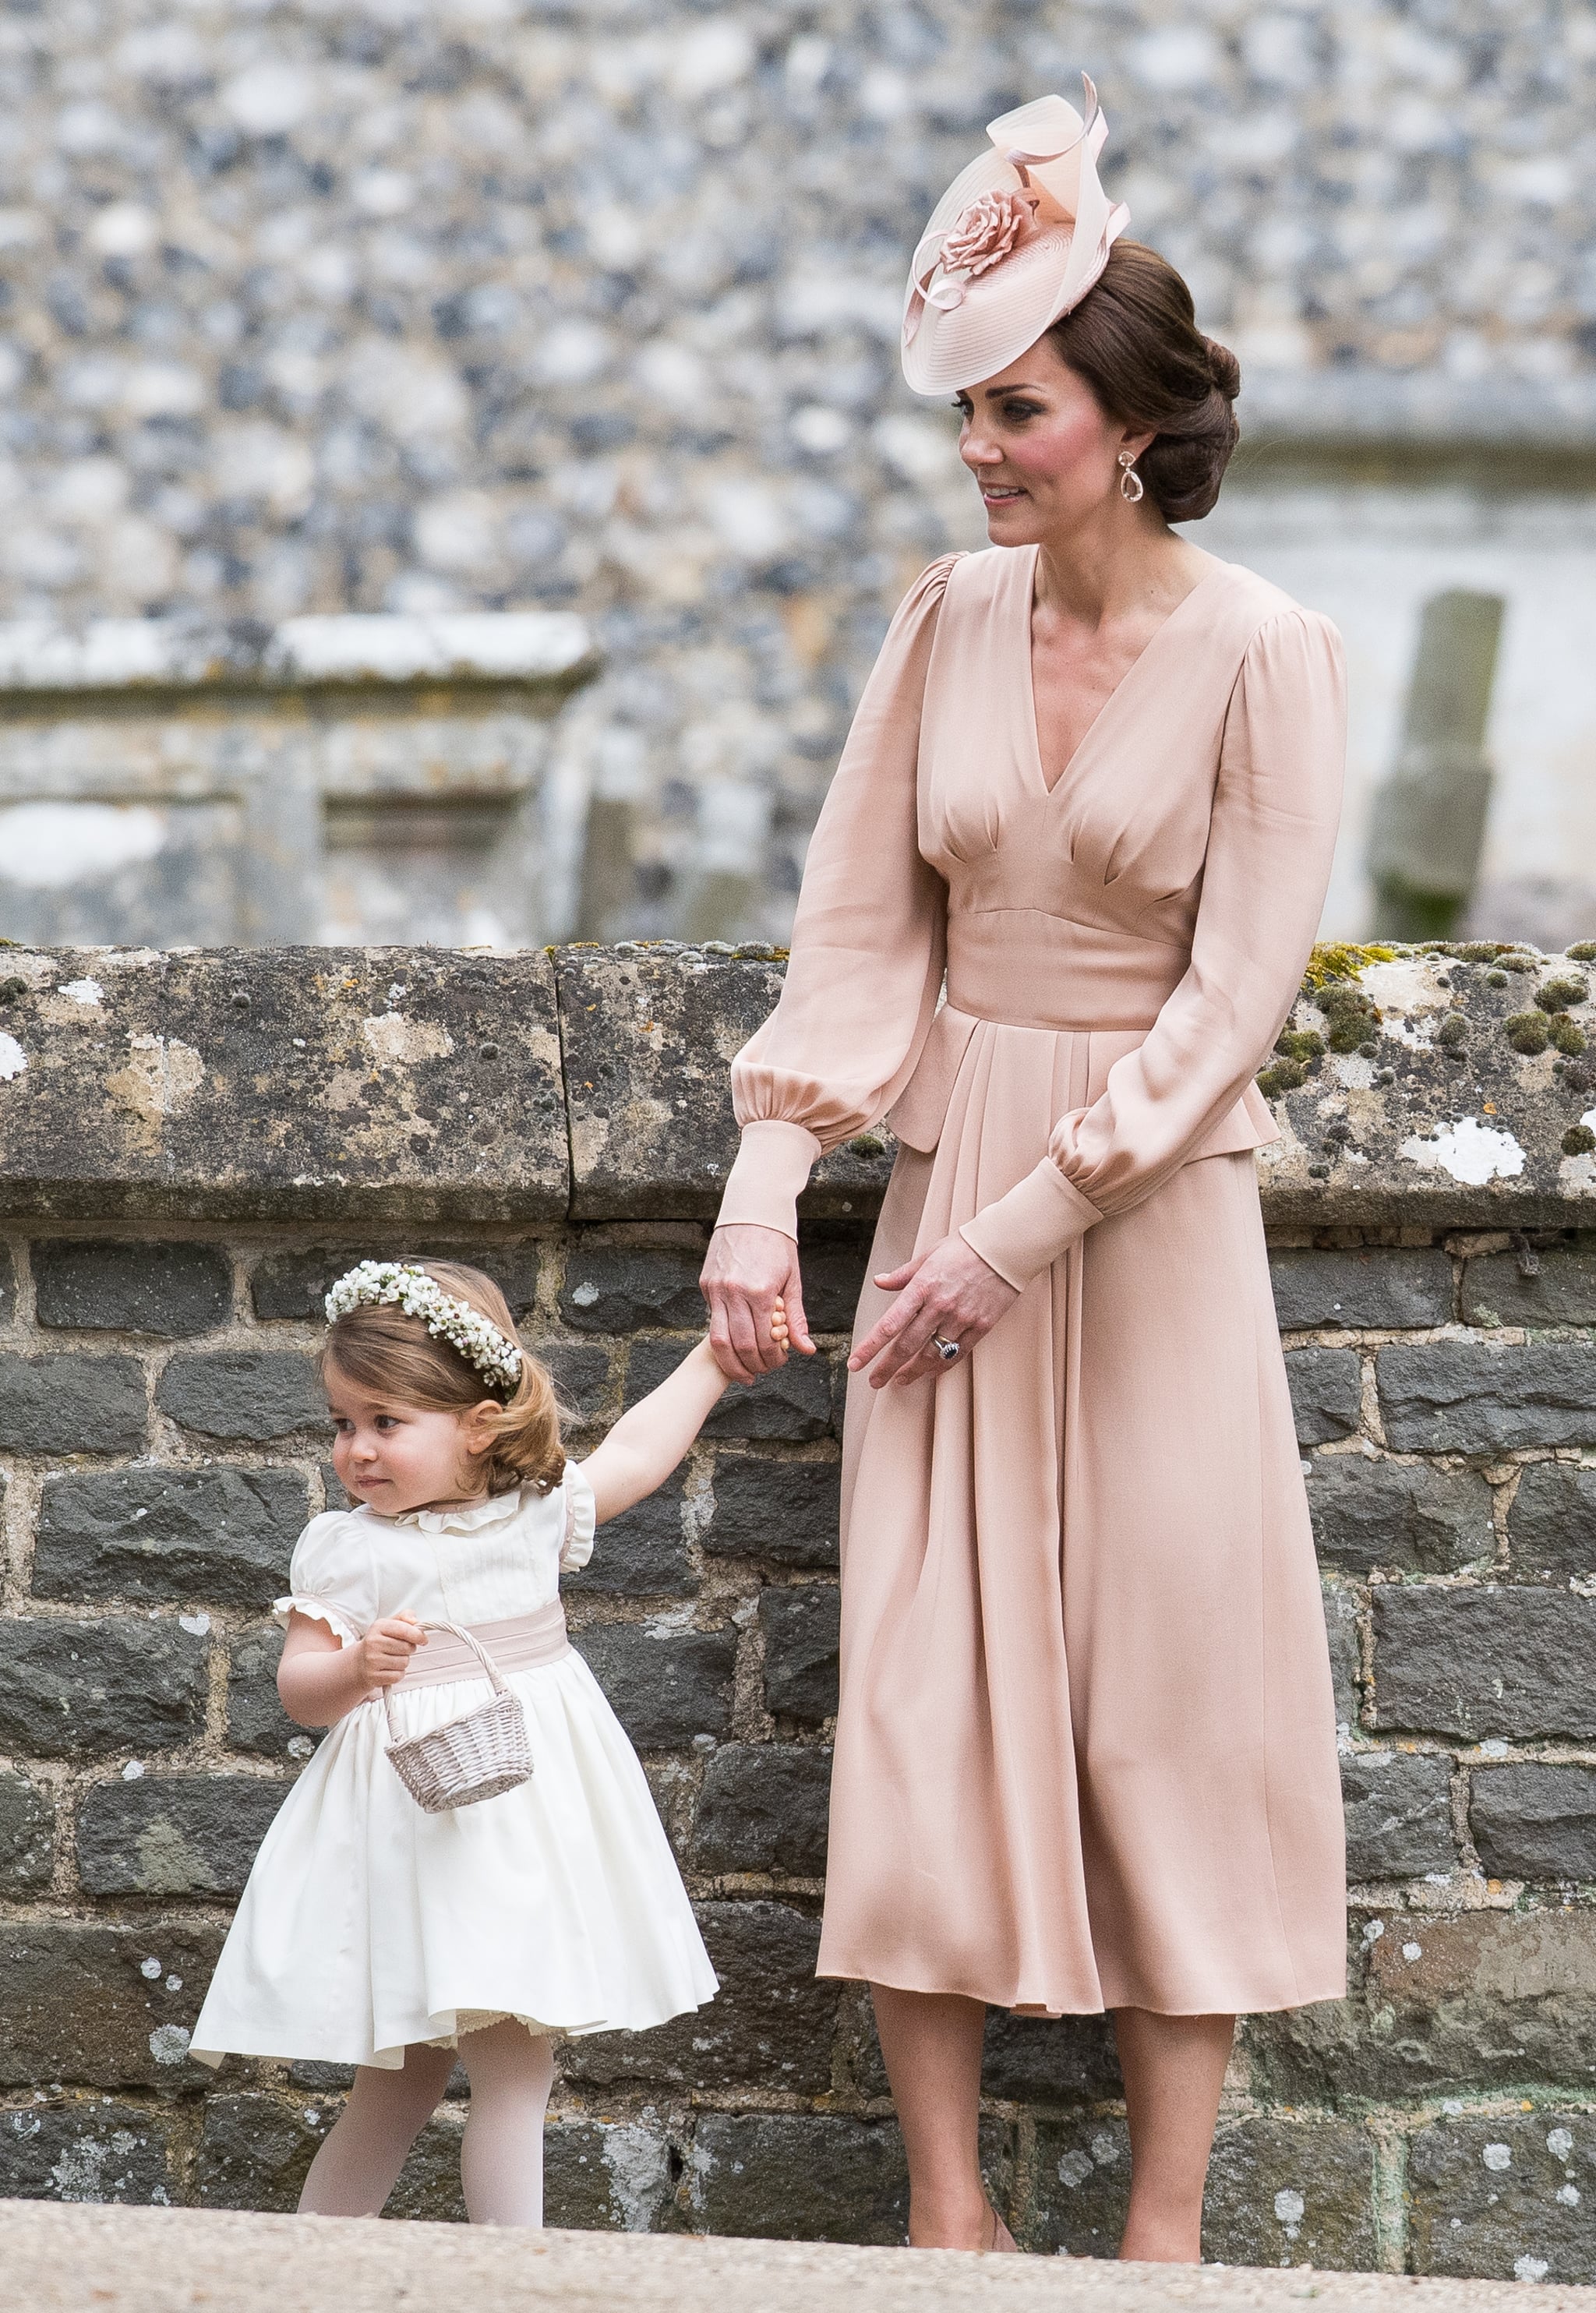 Kate Middleton Alexander McQueen Dress at Pippa's Wedding | POPSUGAR Fashion